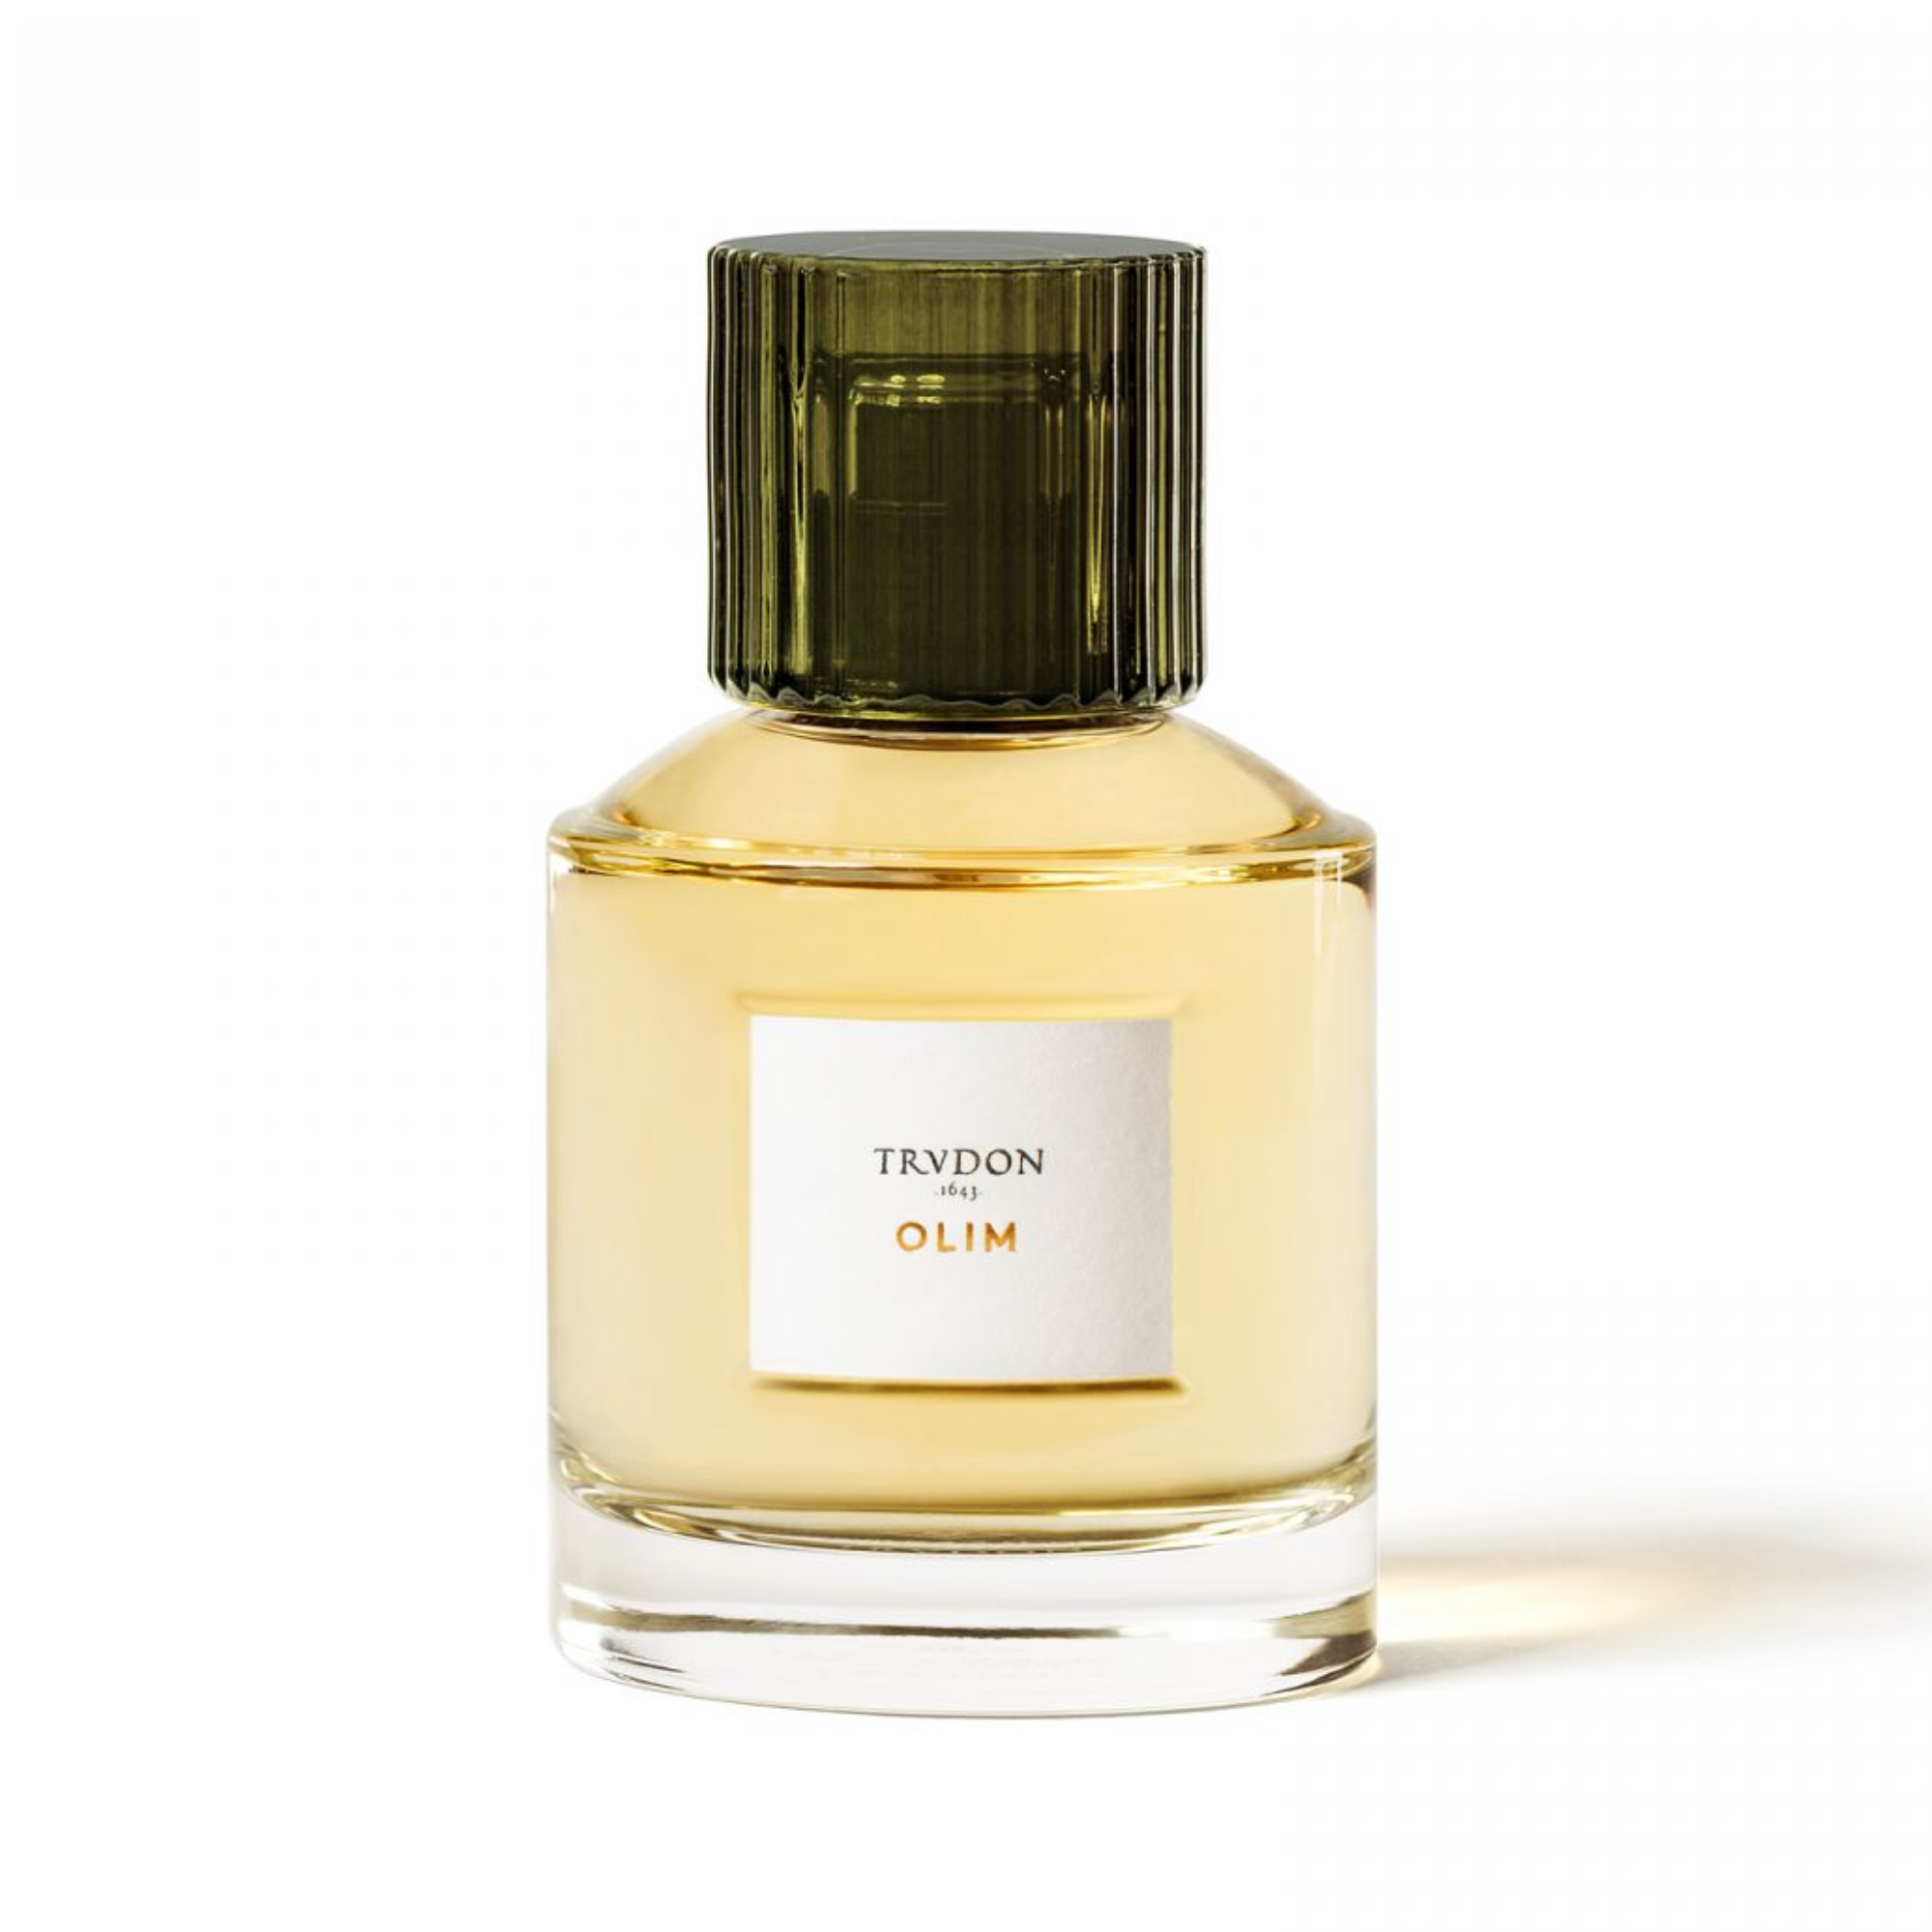 Trudon Olim EDP 100ml - Lore Perfumery